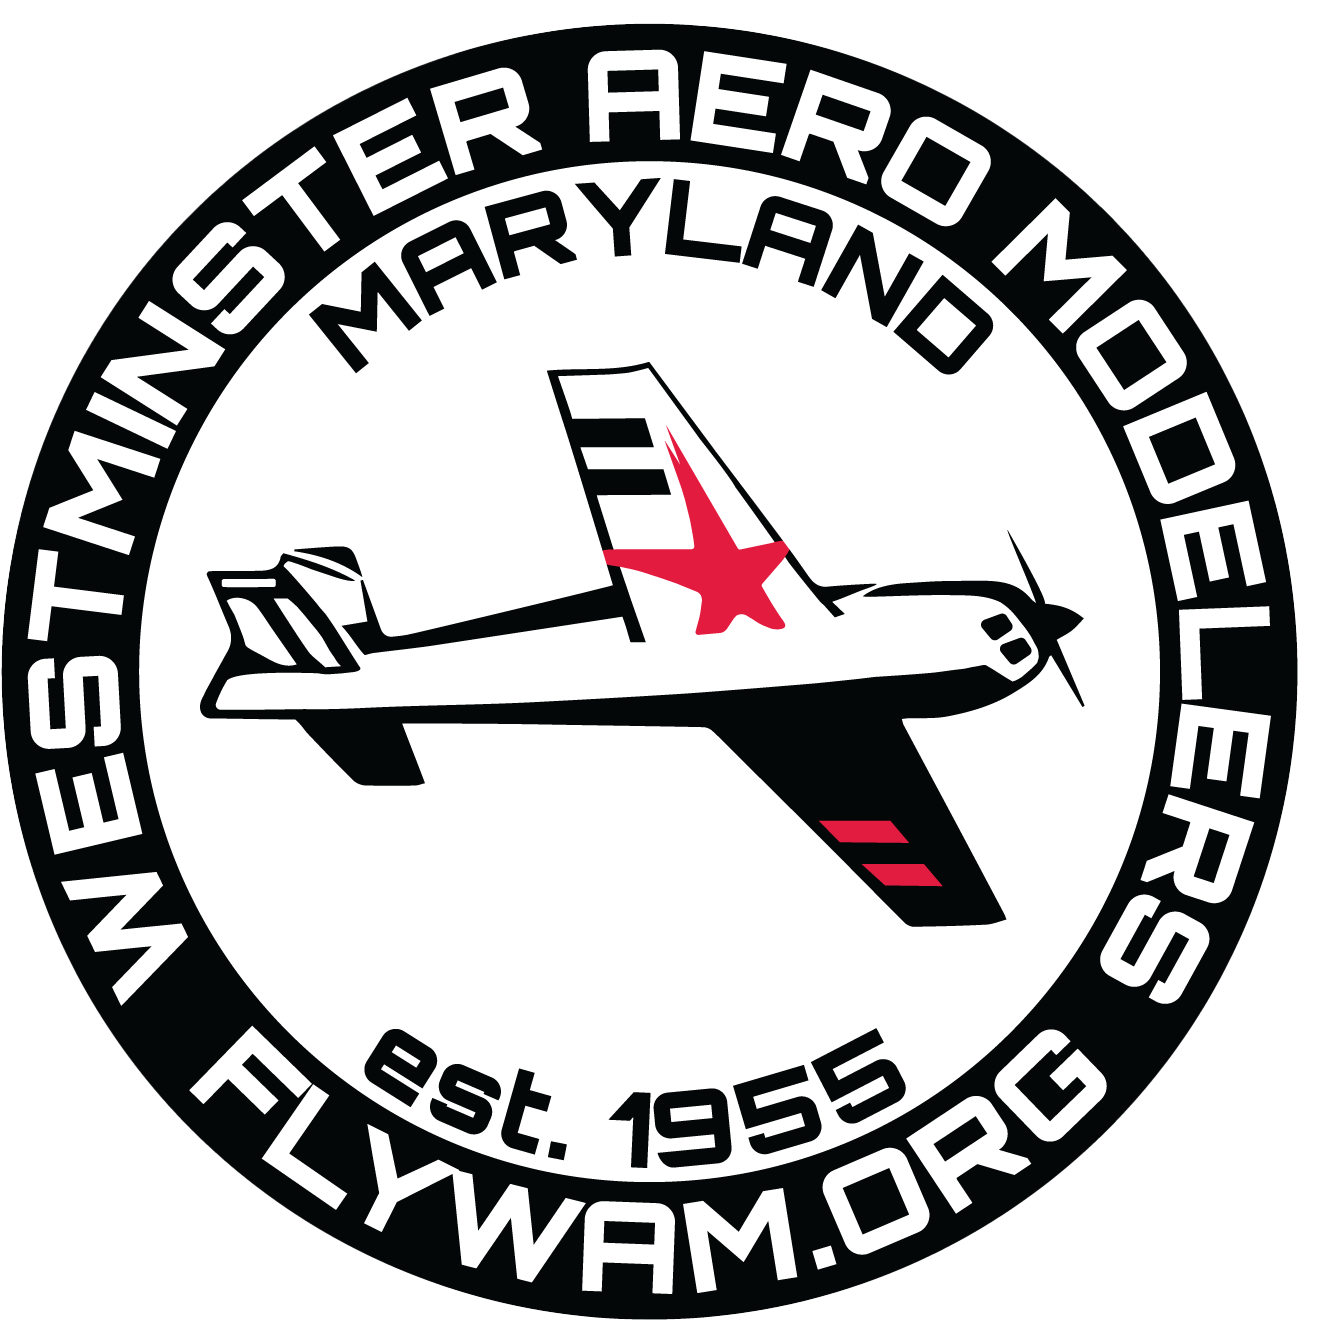 Westminster Aero Modelers